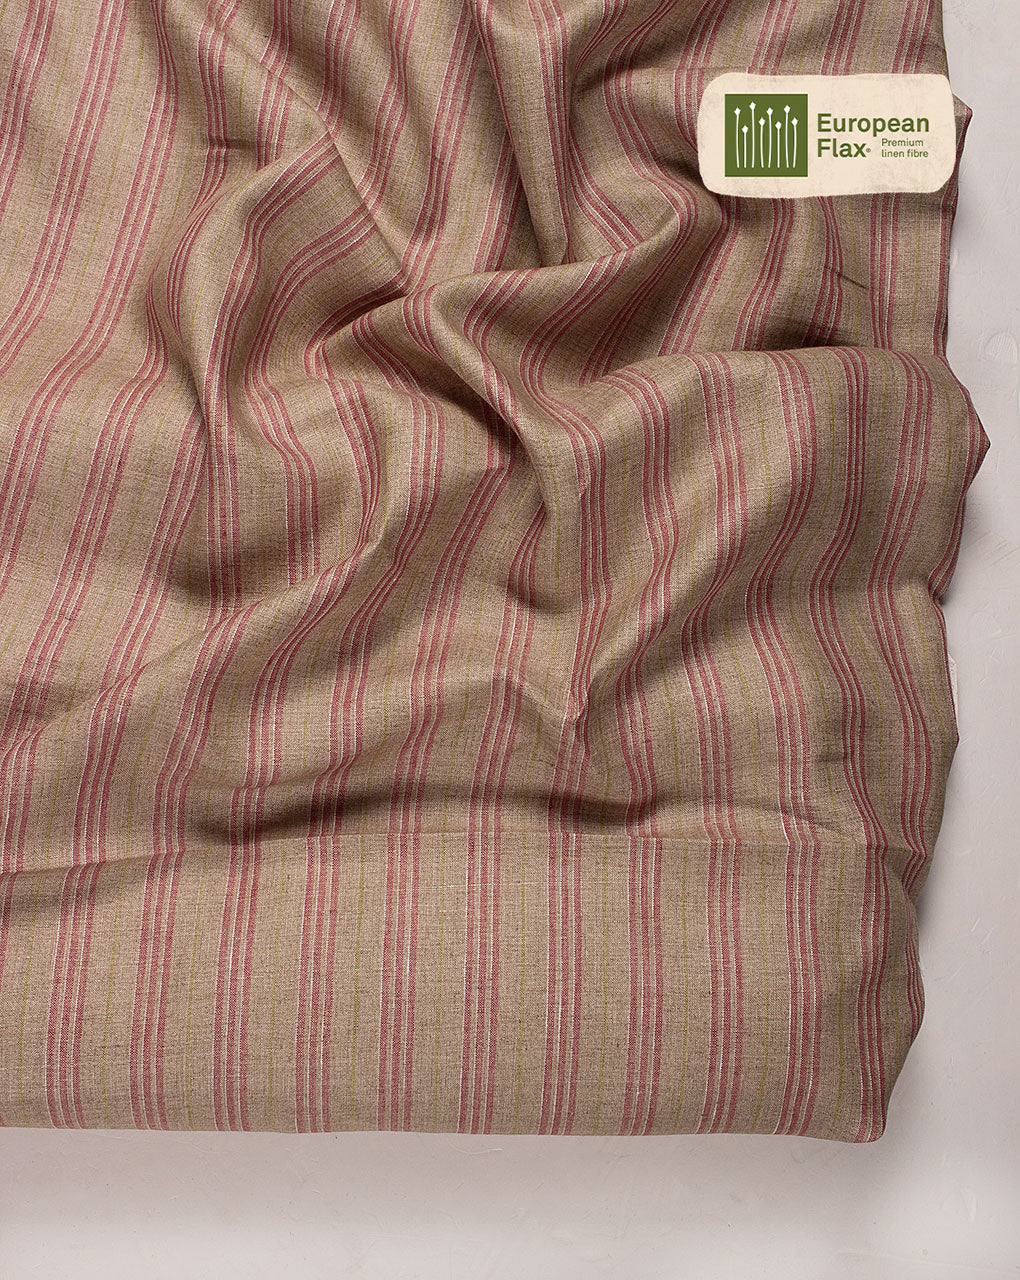 ( Pre Cut 1.25 MTR ) Yarn Dyed Linen European Flax Certified Fabric